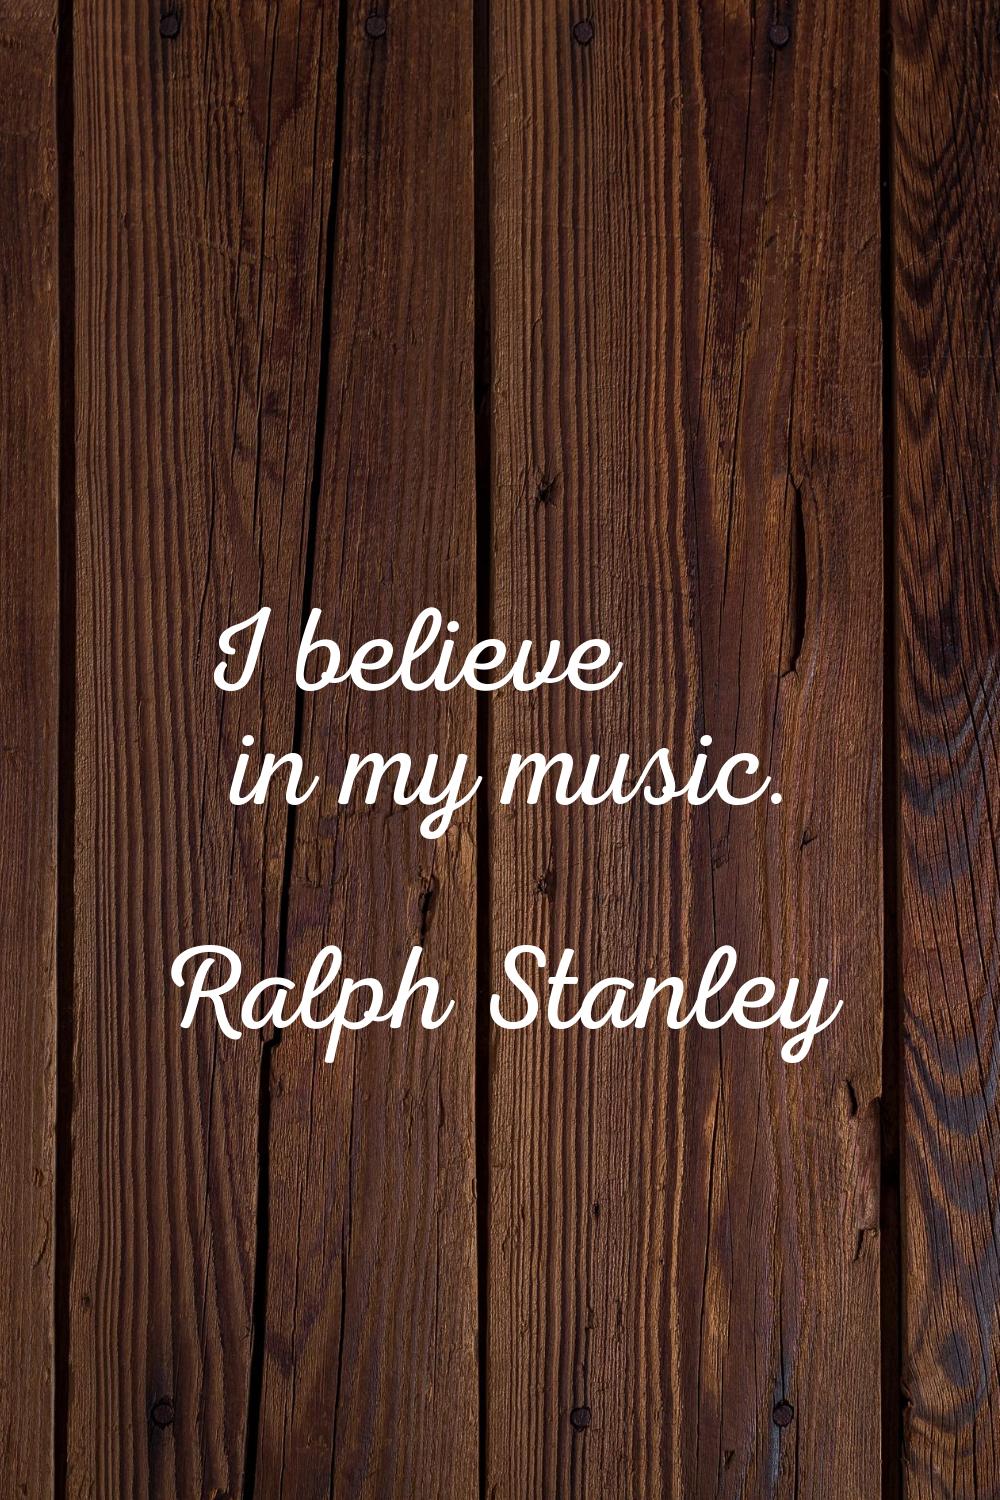 I believe in my music.